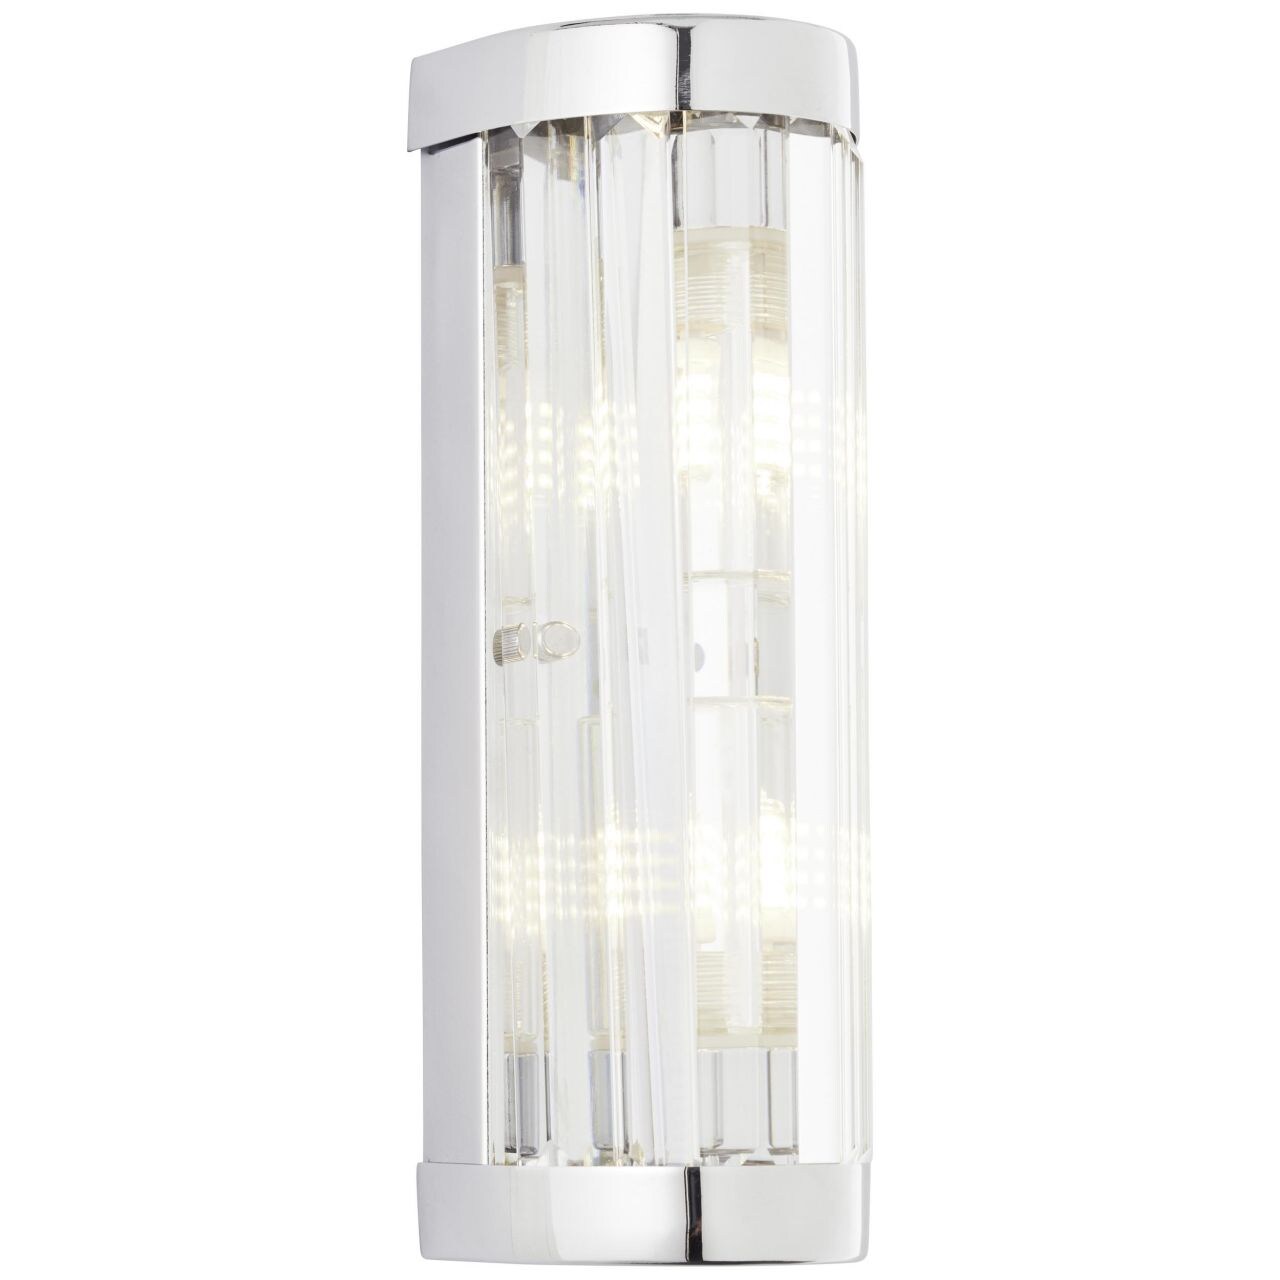 BRILLIANT Lampe, Lemont Wandleuchte 30cm chrom, Metall/Glas, 2x QT14, G9, 18W,Stiftsockellampen (nicht enthalten)